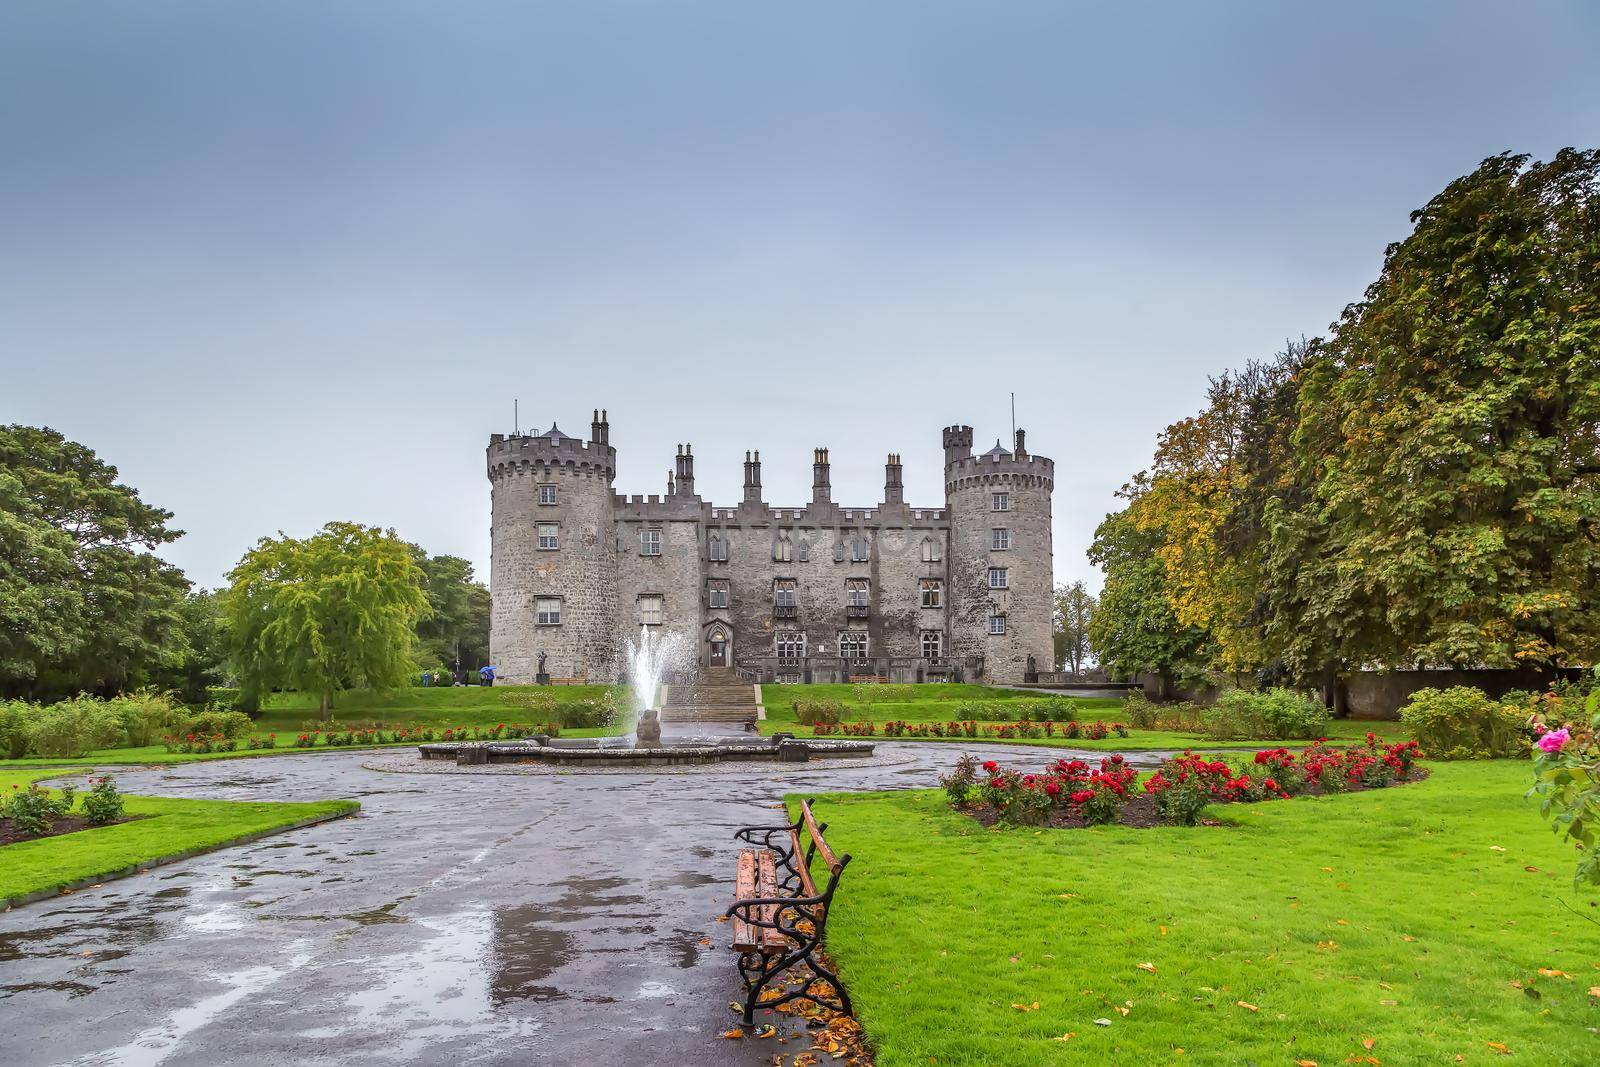 Kilkenny Castle, Ireland by borisb17